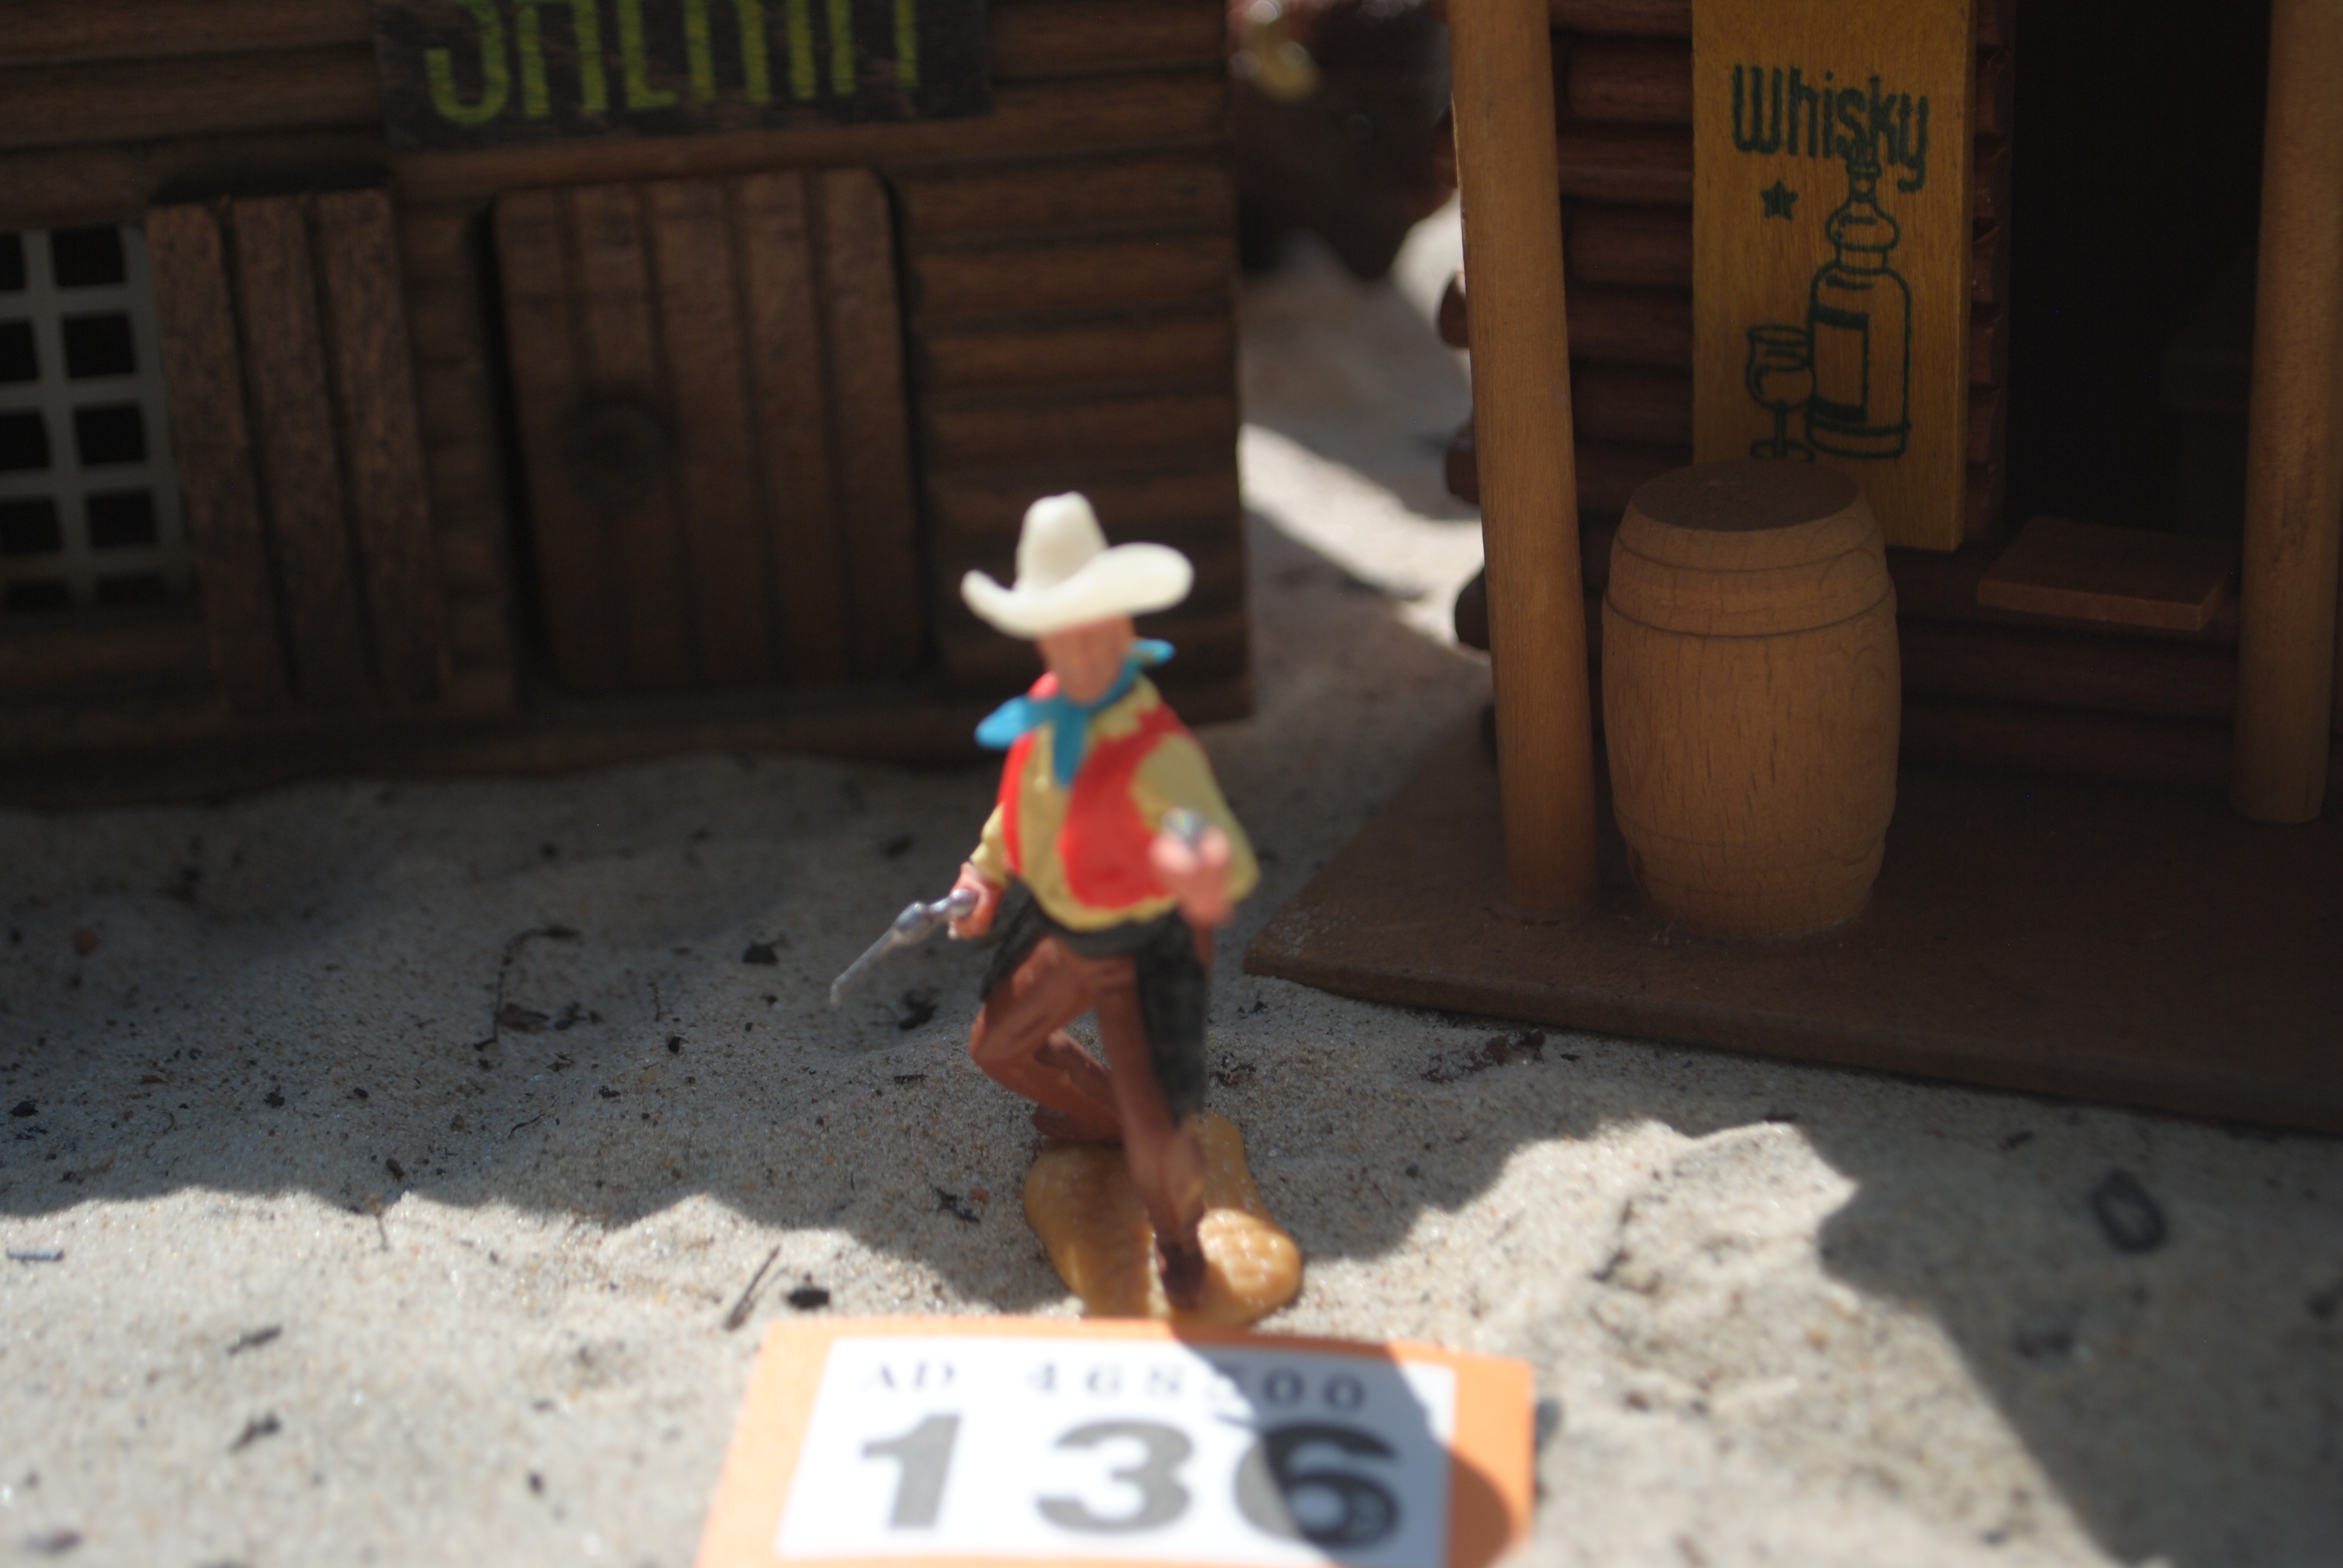 Timpo Toys O.136 Cowboy 2nd version